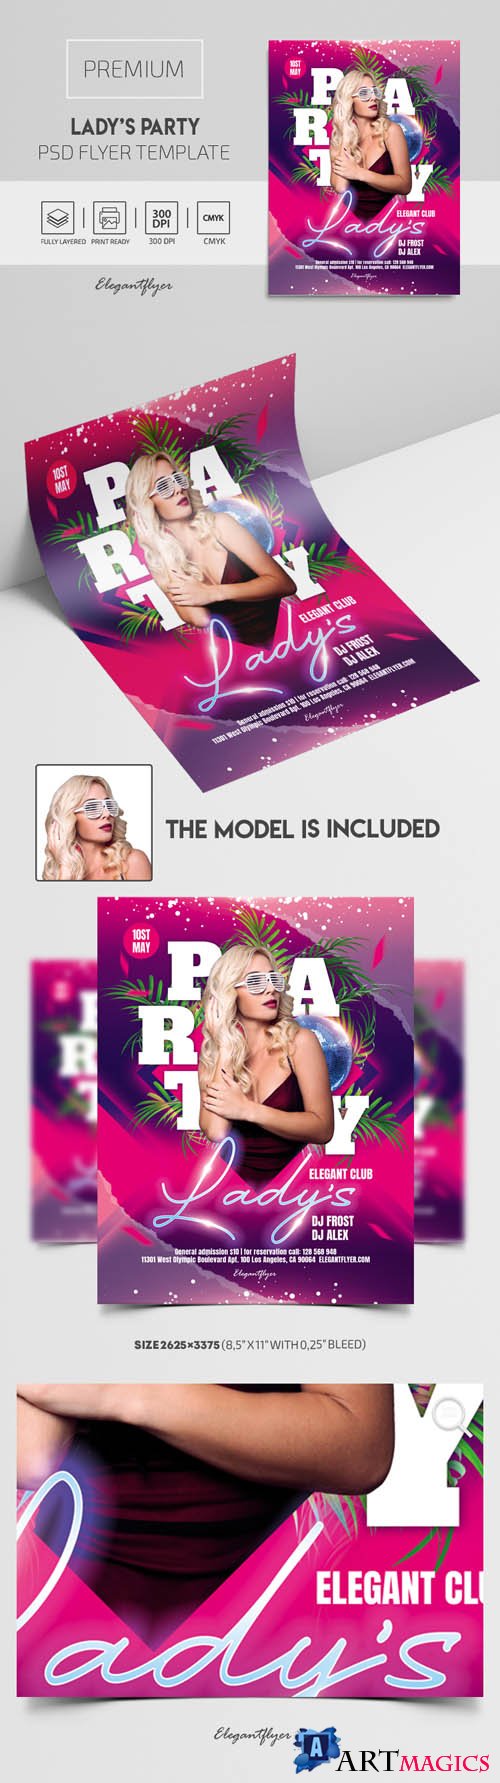 Ladys Party Premium PSD Flyer Template